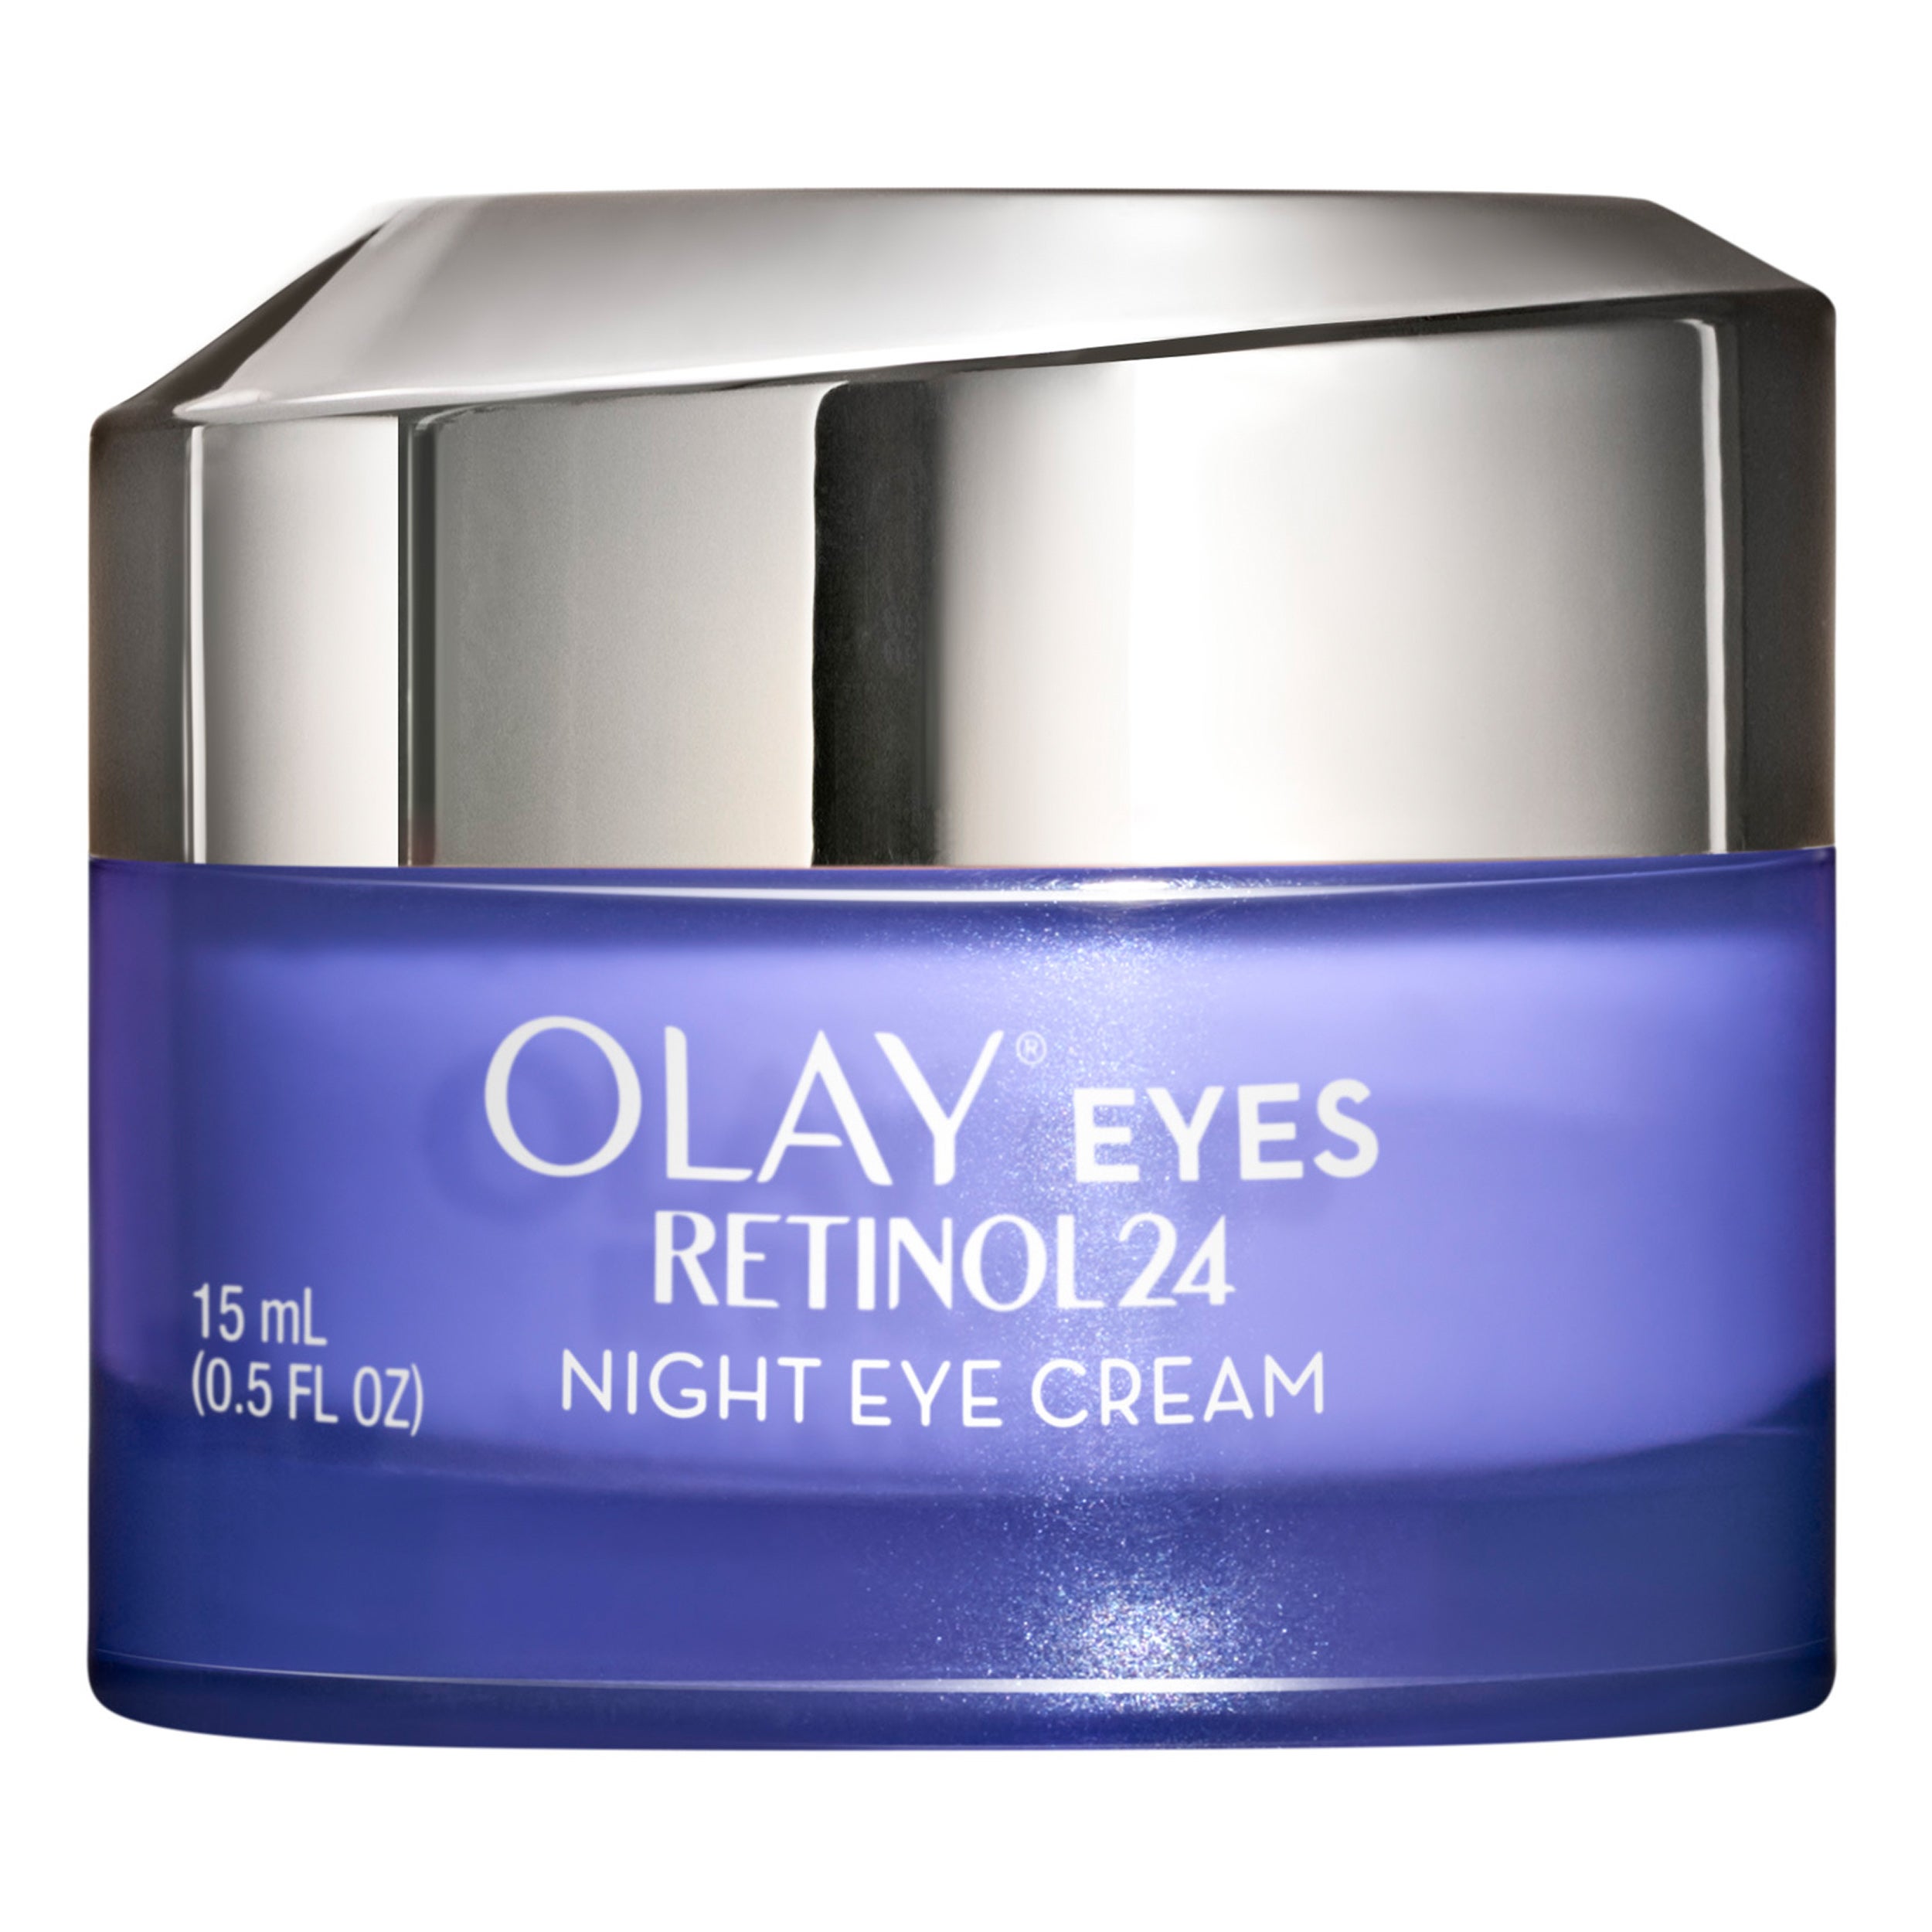 Olay + Regenerist Retinol 24 Night Eye Cream